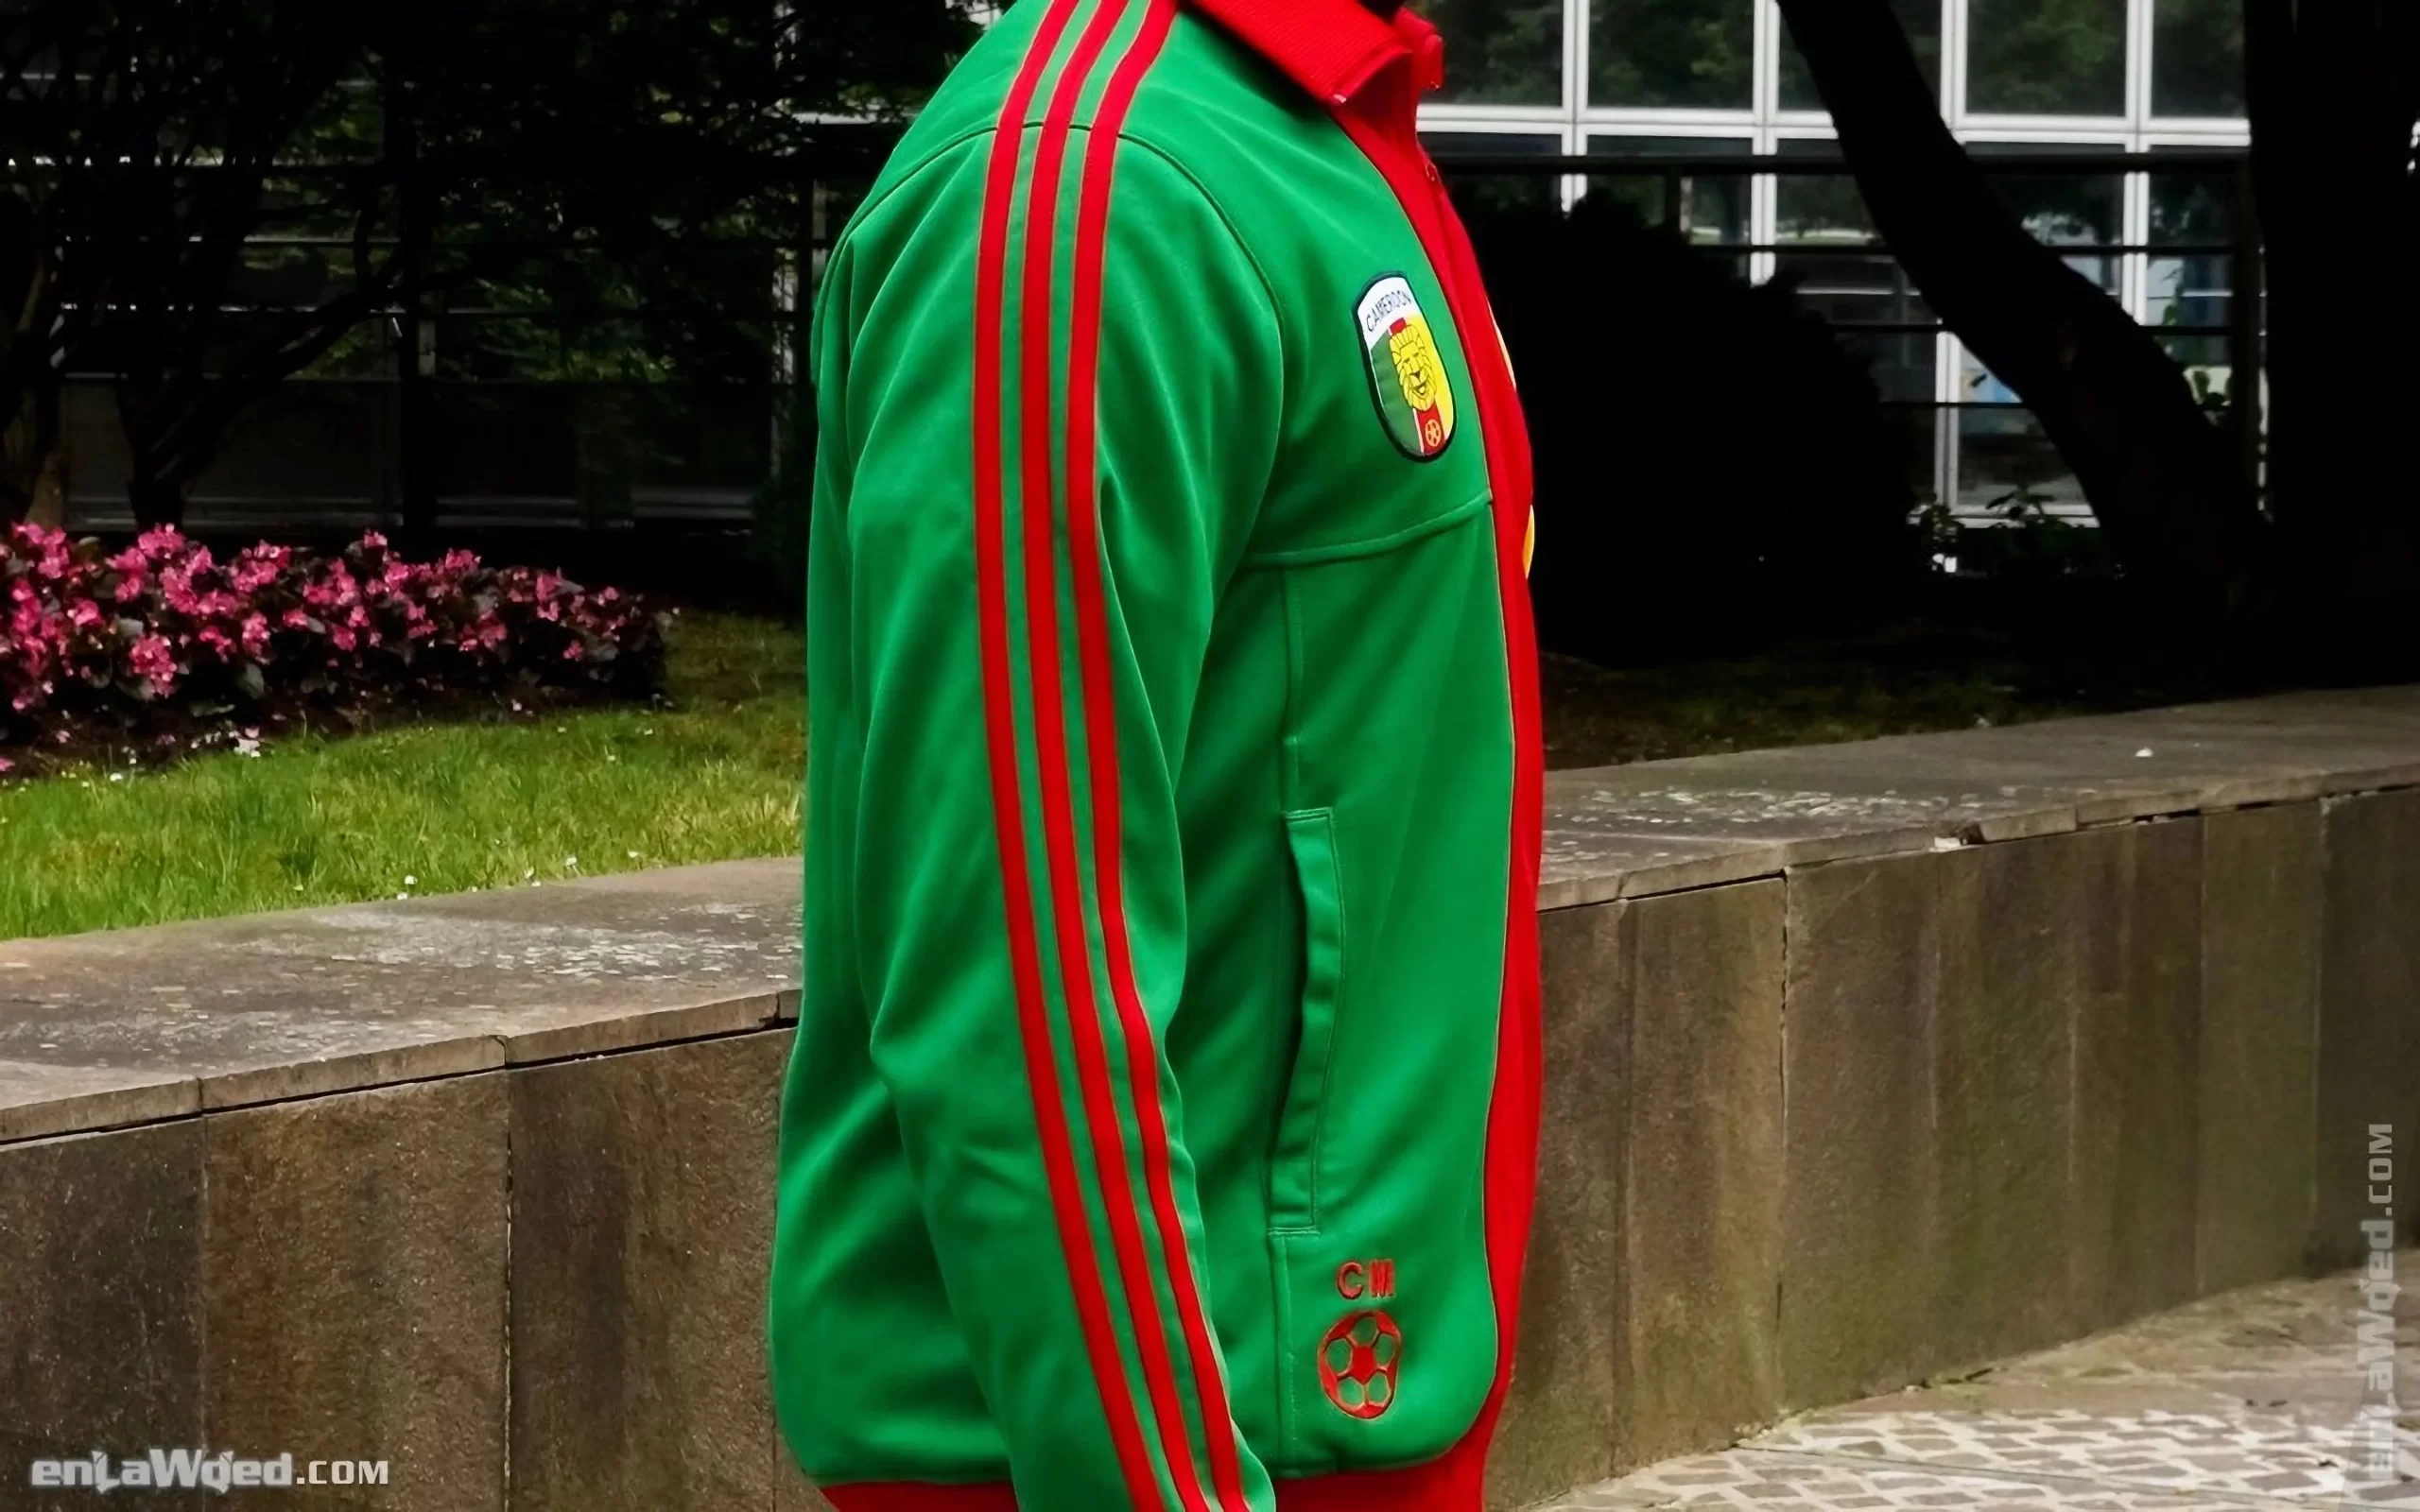 Men’s 2007 Cameroon Track Top by Adidas Originals: Jubilant (EnLawded.com file #lmchk90474ip2y122244kg9st)